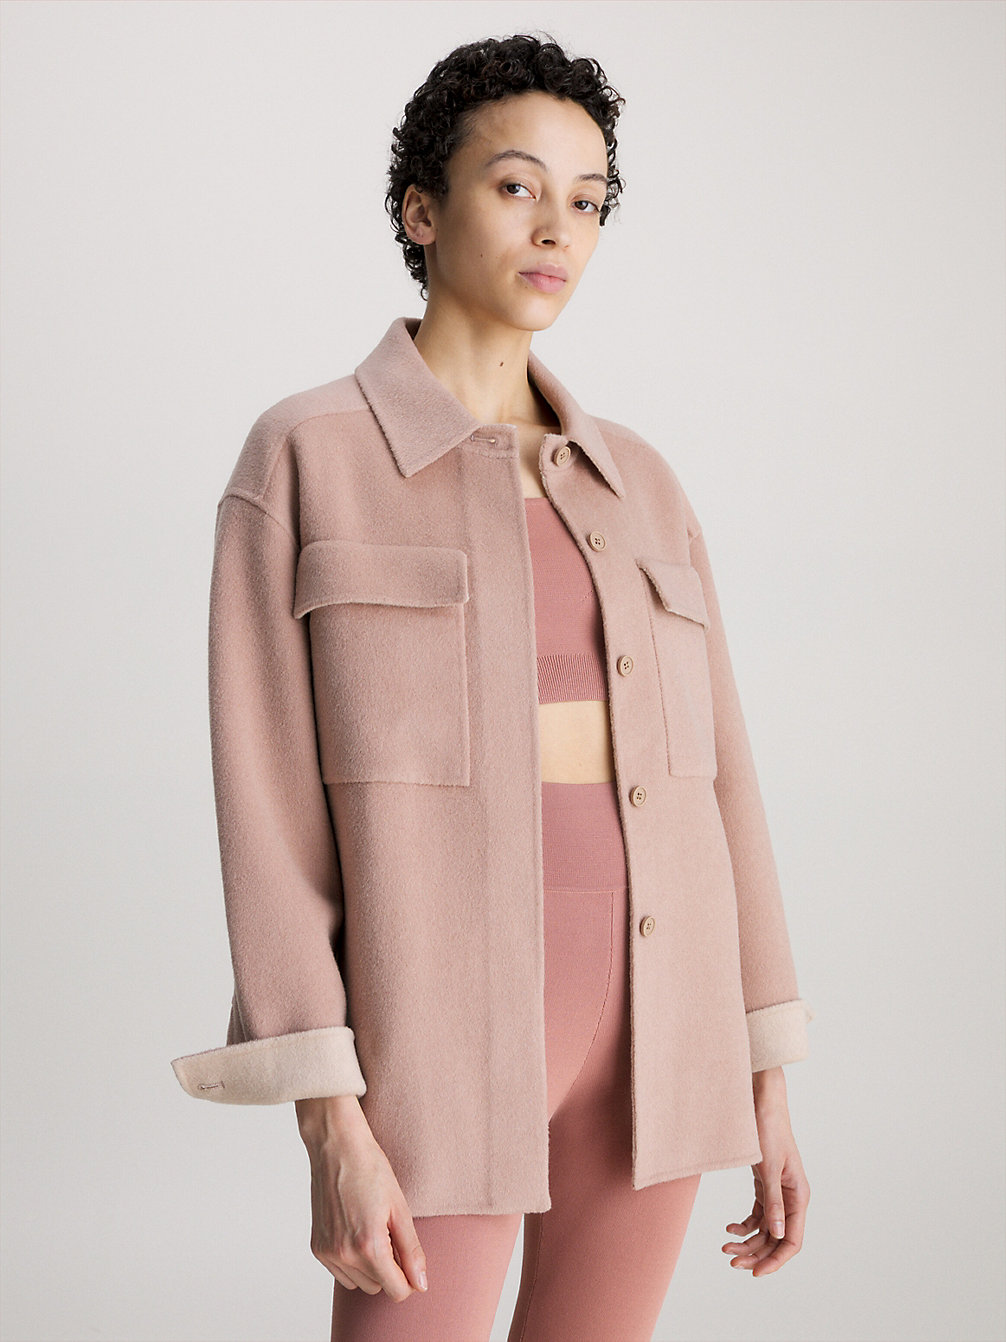 ROEBUCK / MOONLIGHT Relaxed Wool Shacket undefined women Calvin Klein